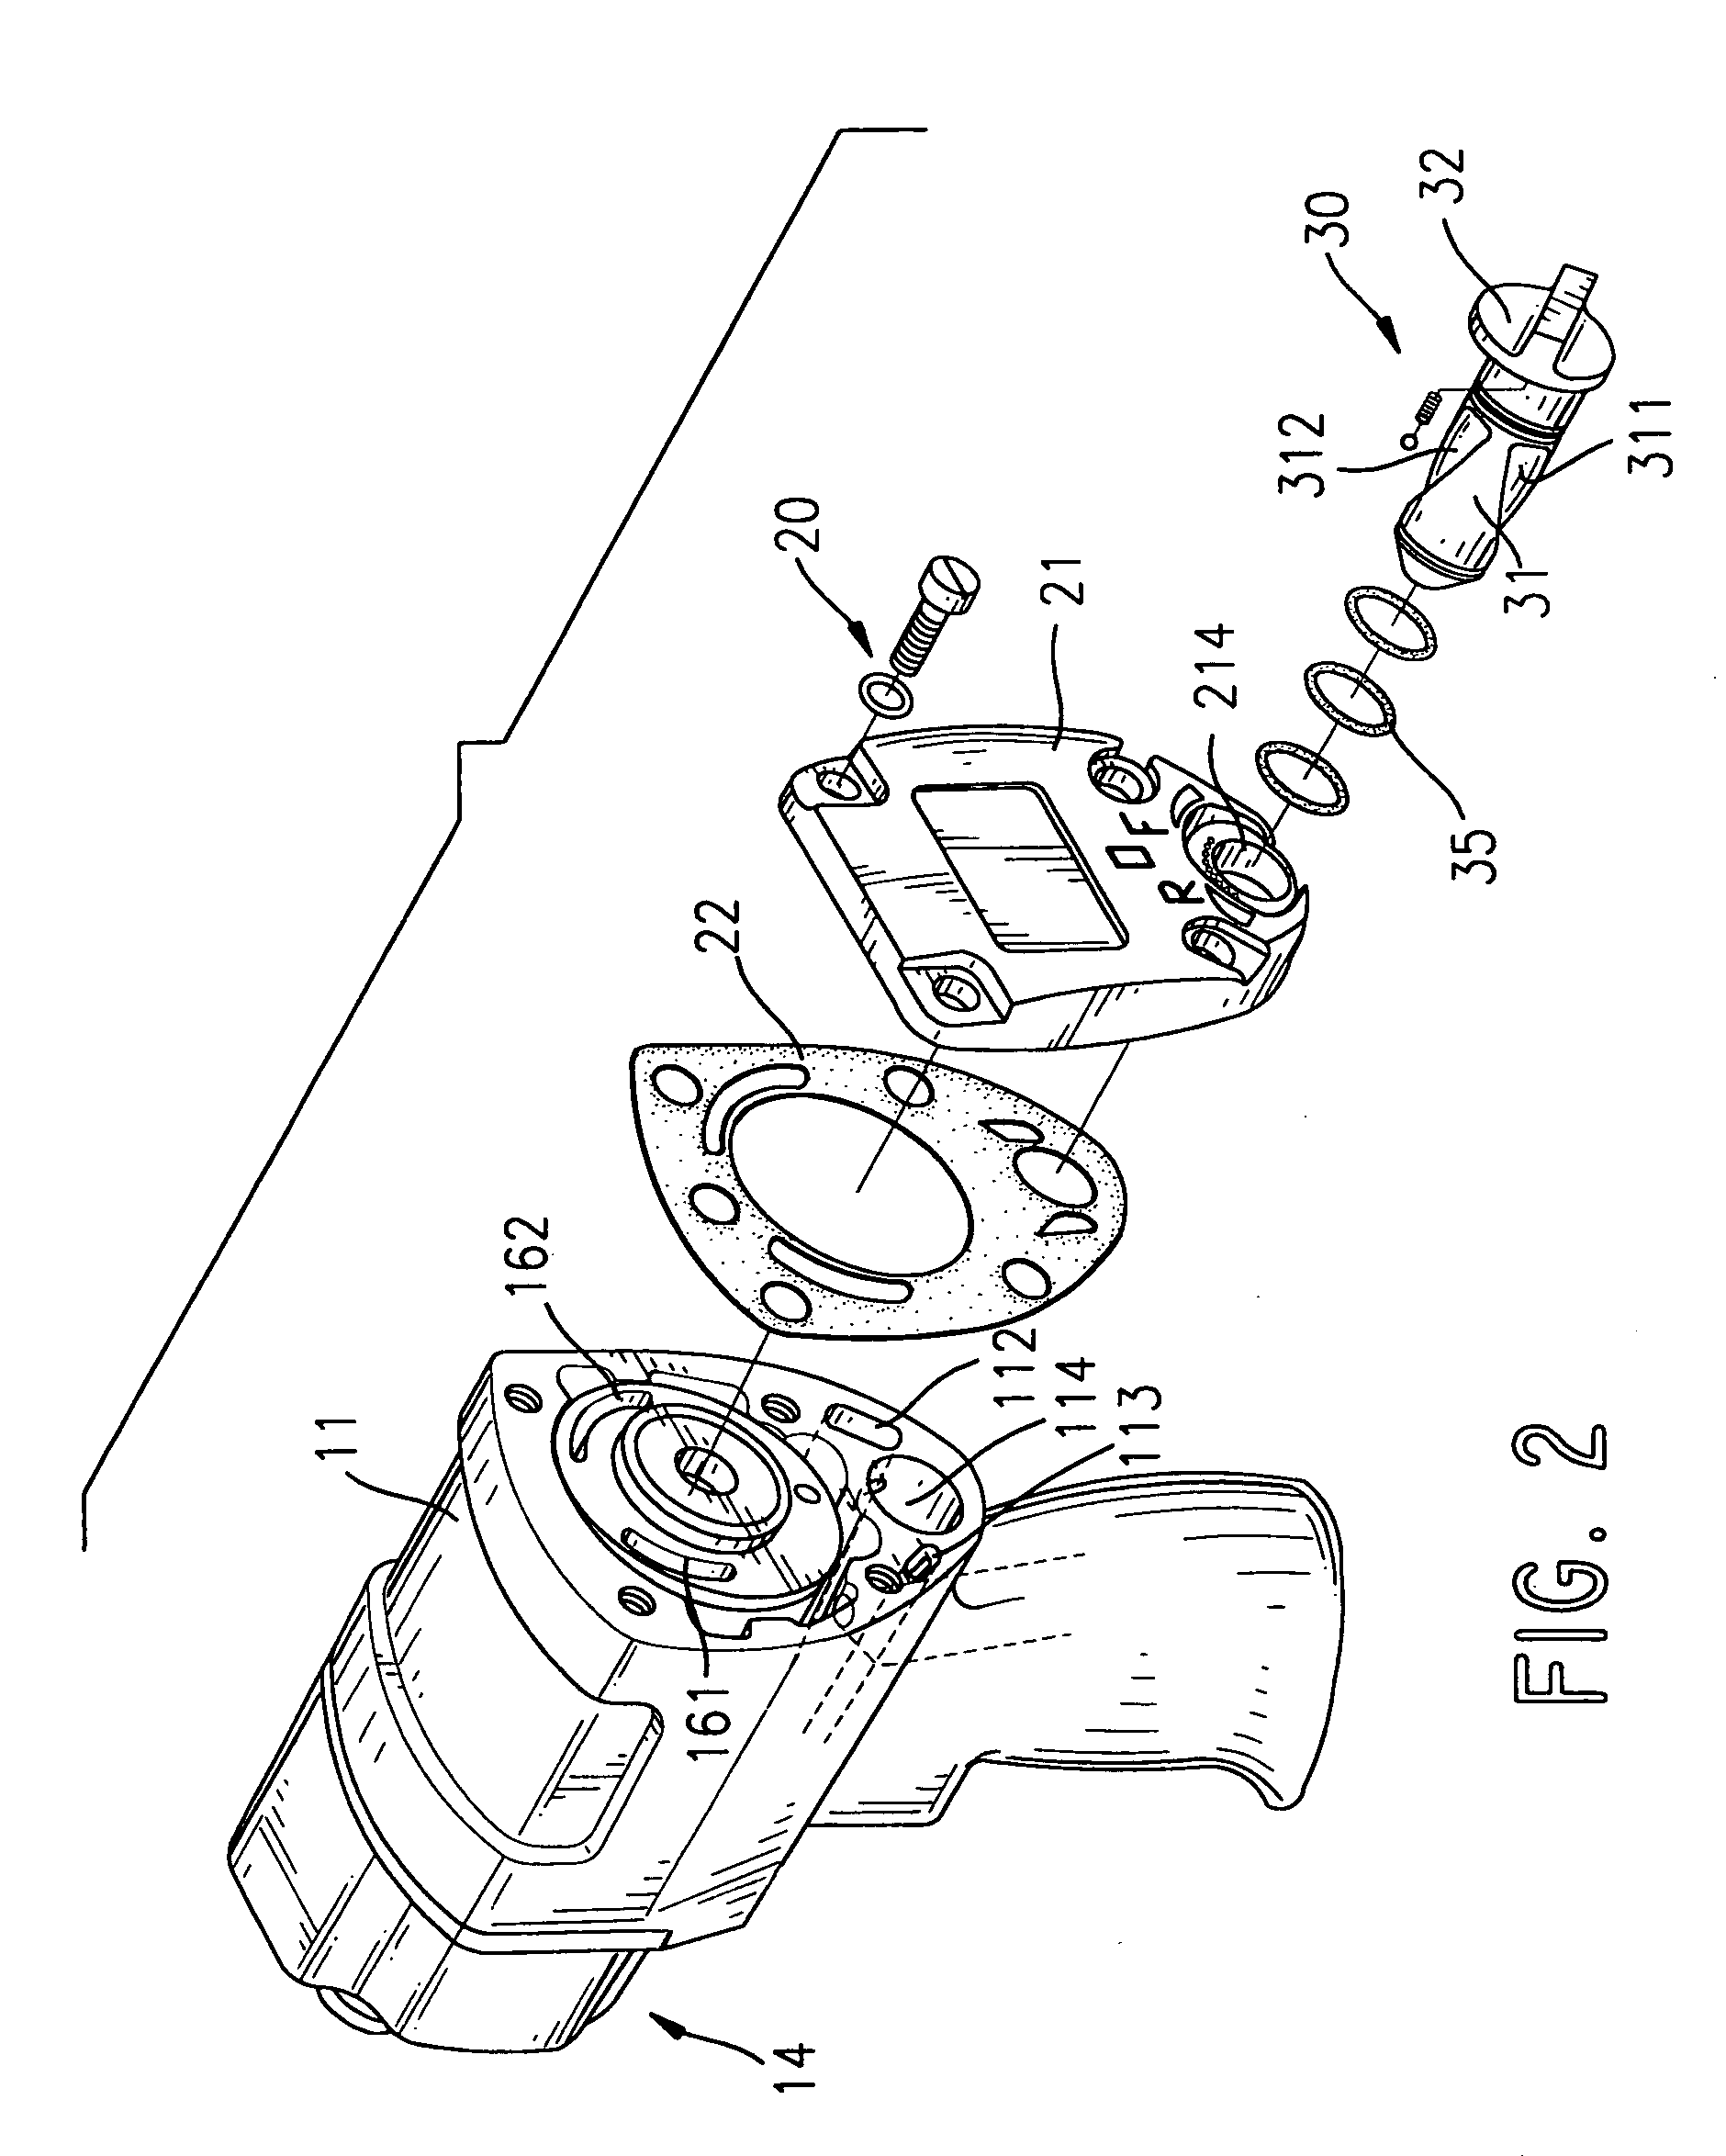 Bidirectional pneumatic impact wrench